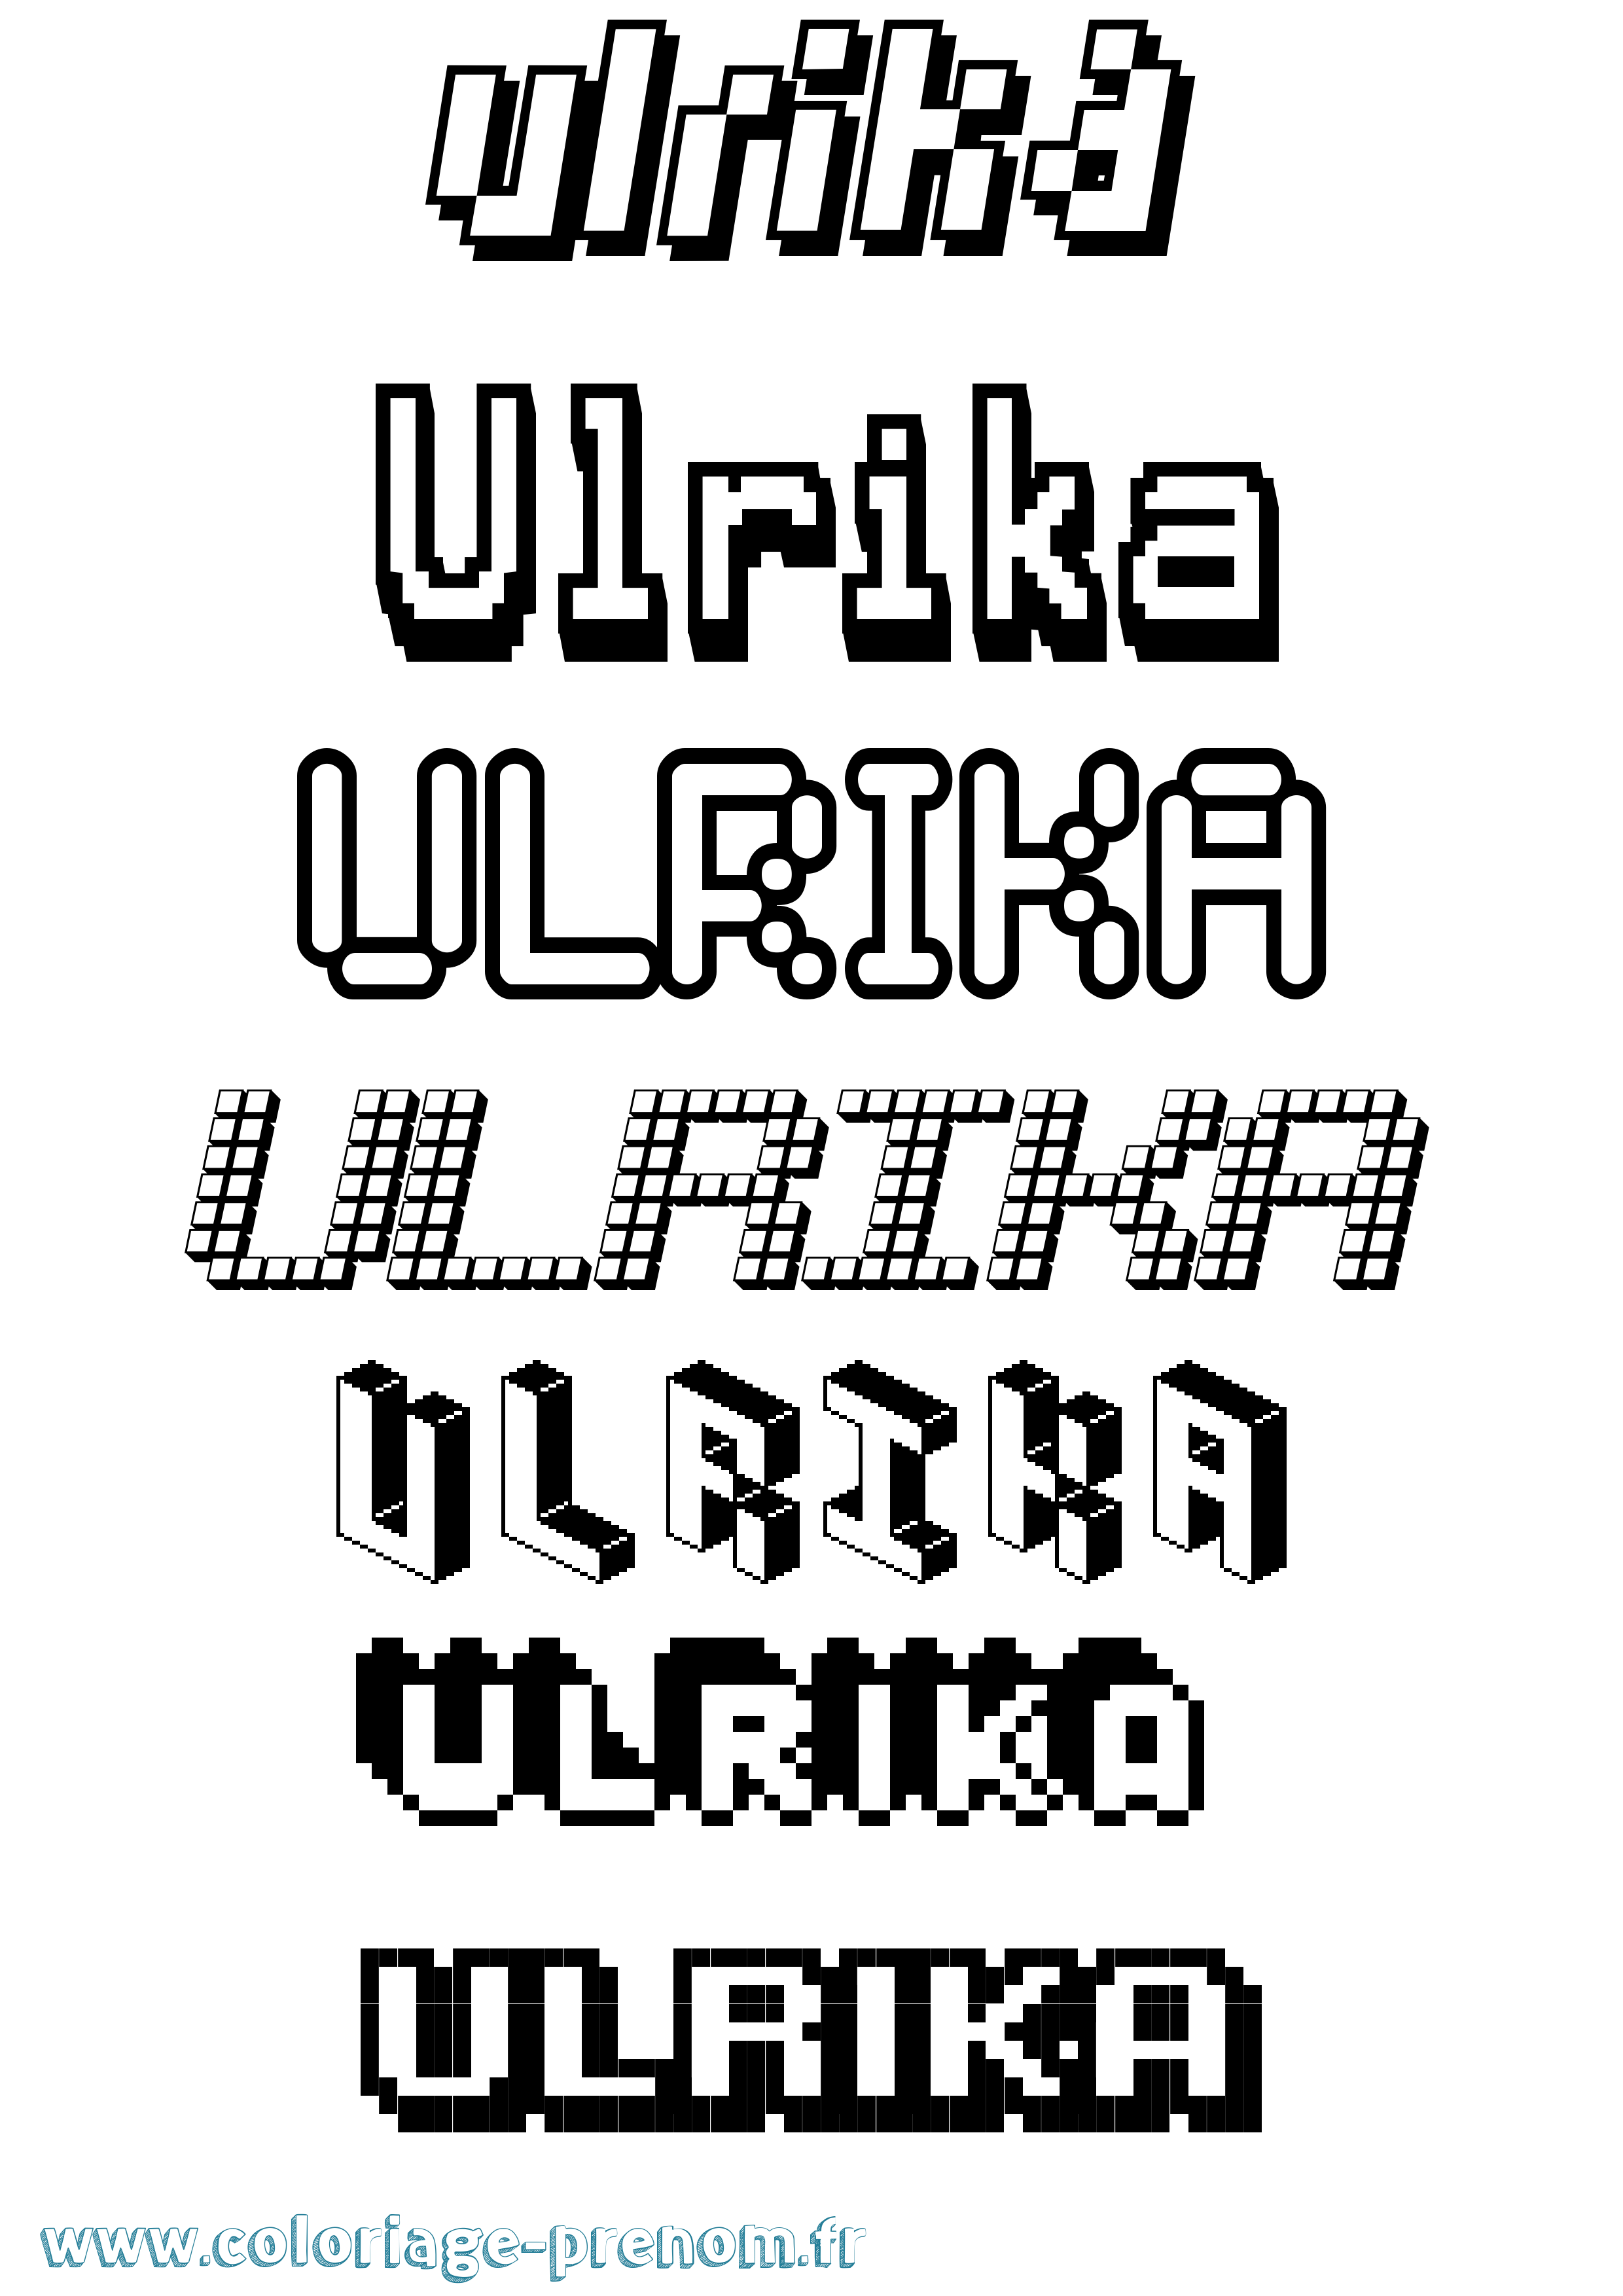 Coloriage prénom Ulrika Pixel